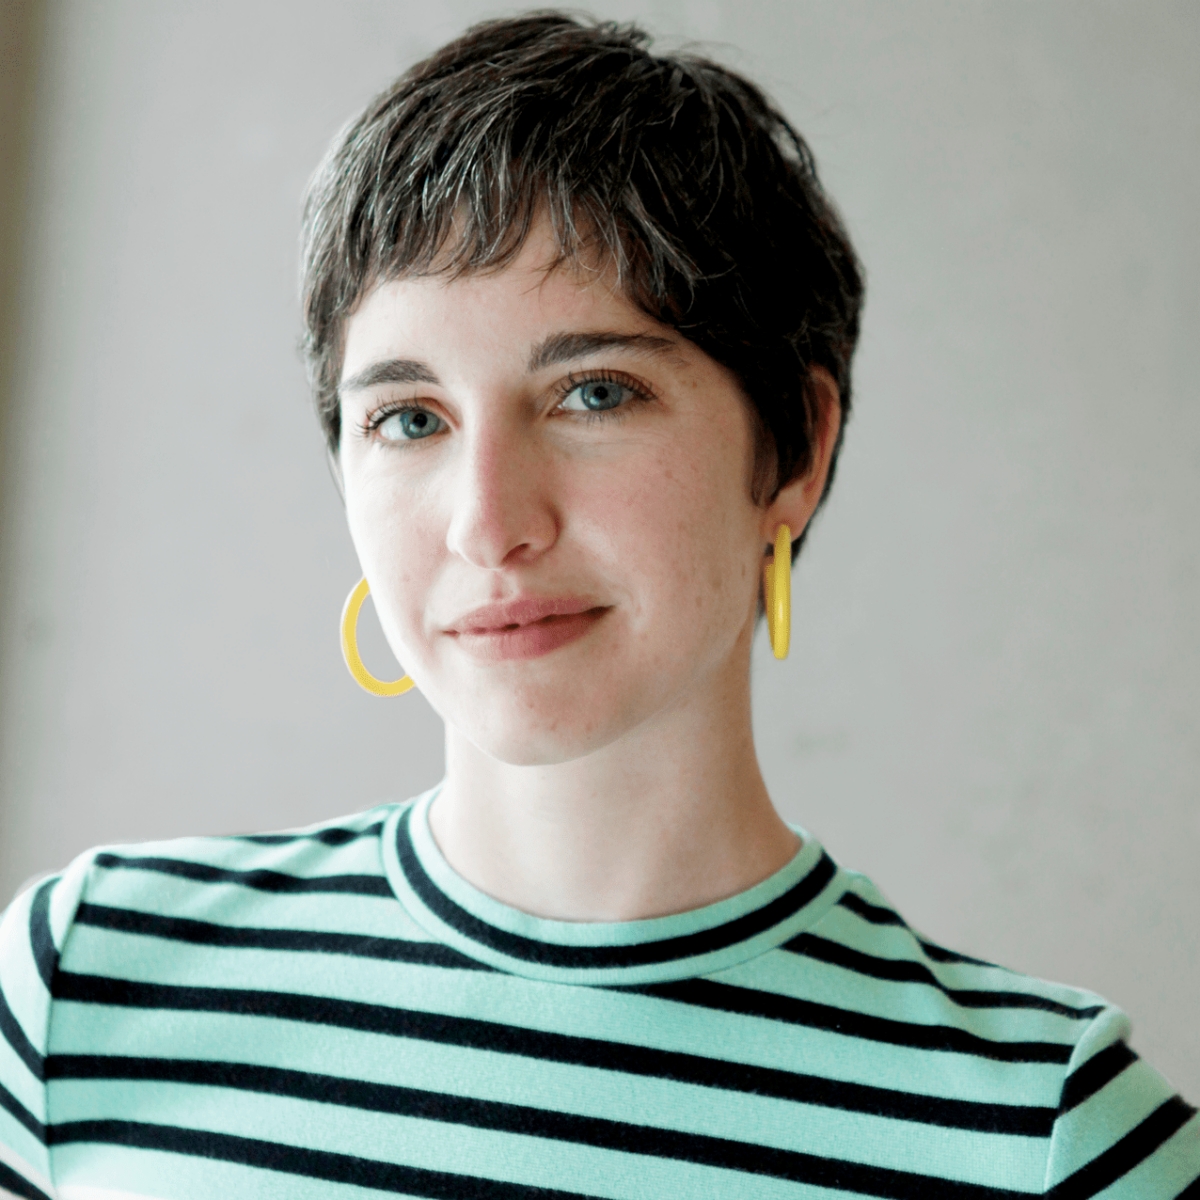 Emily Hoffman in hoop earrings and a striped shirt